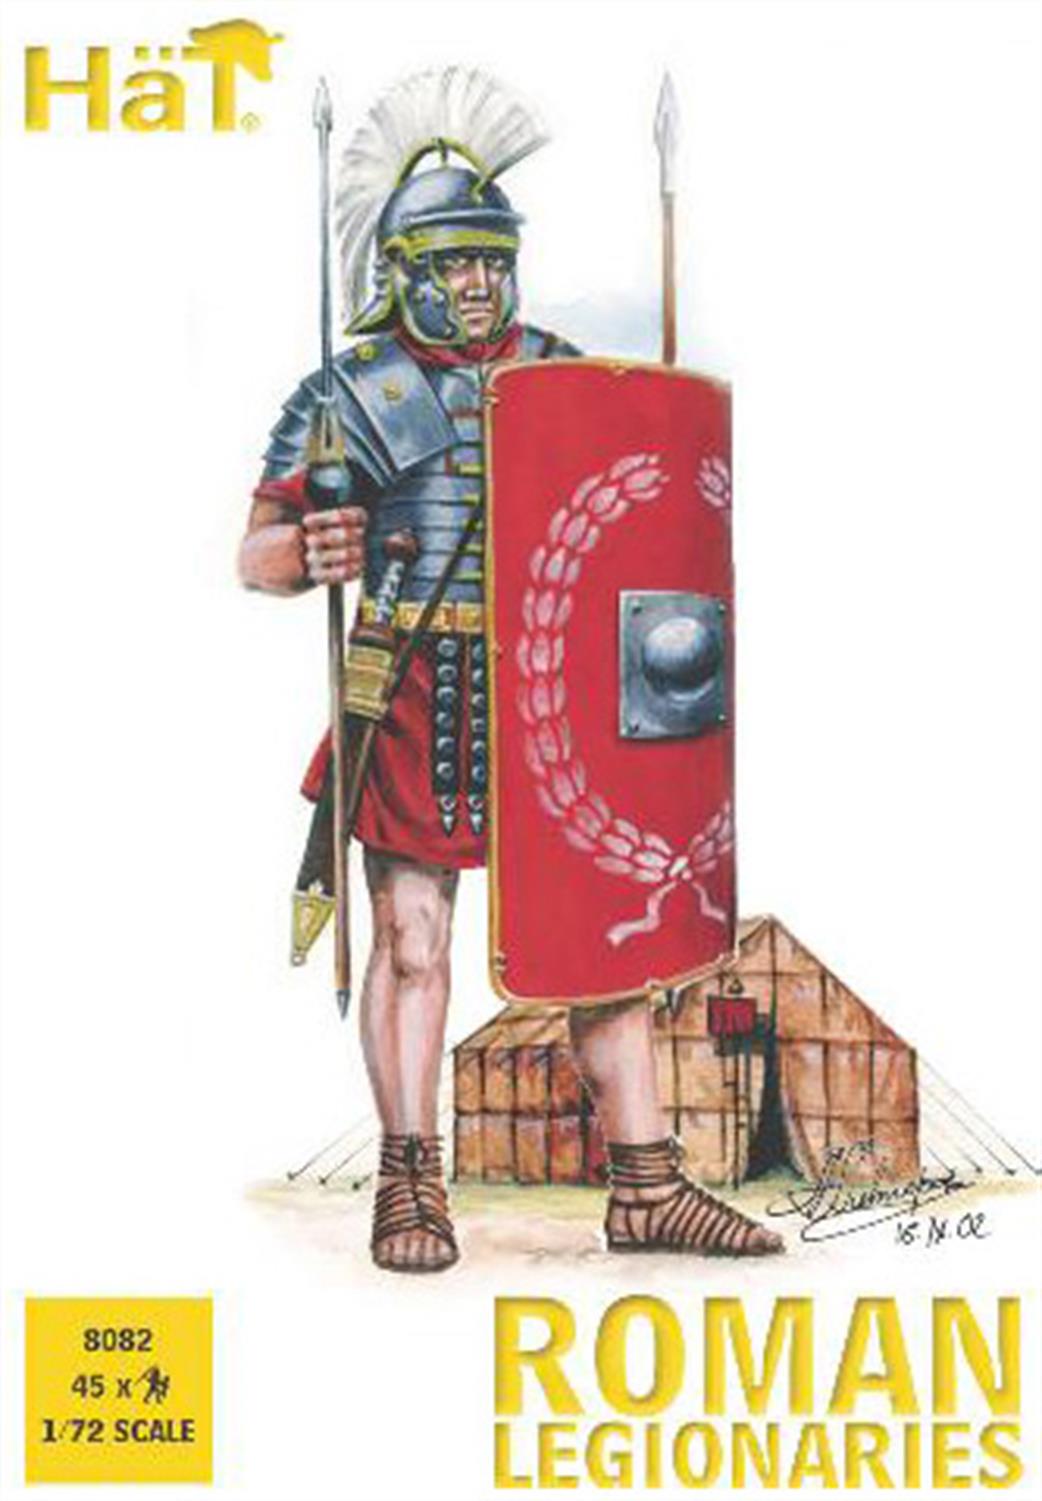 Hat 8082 Roman Legionaries 1/72